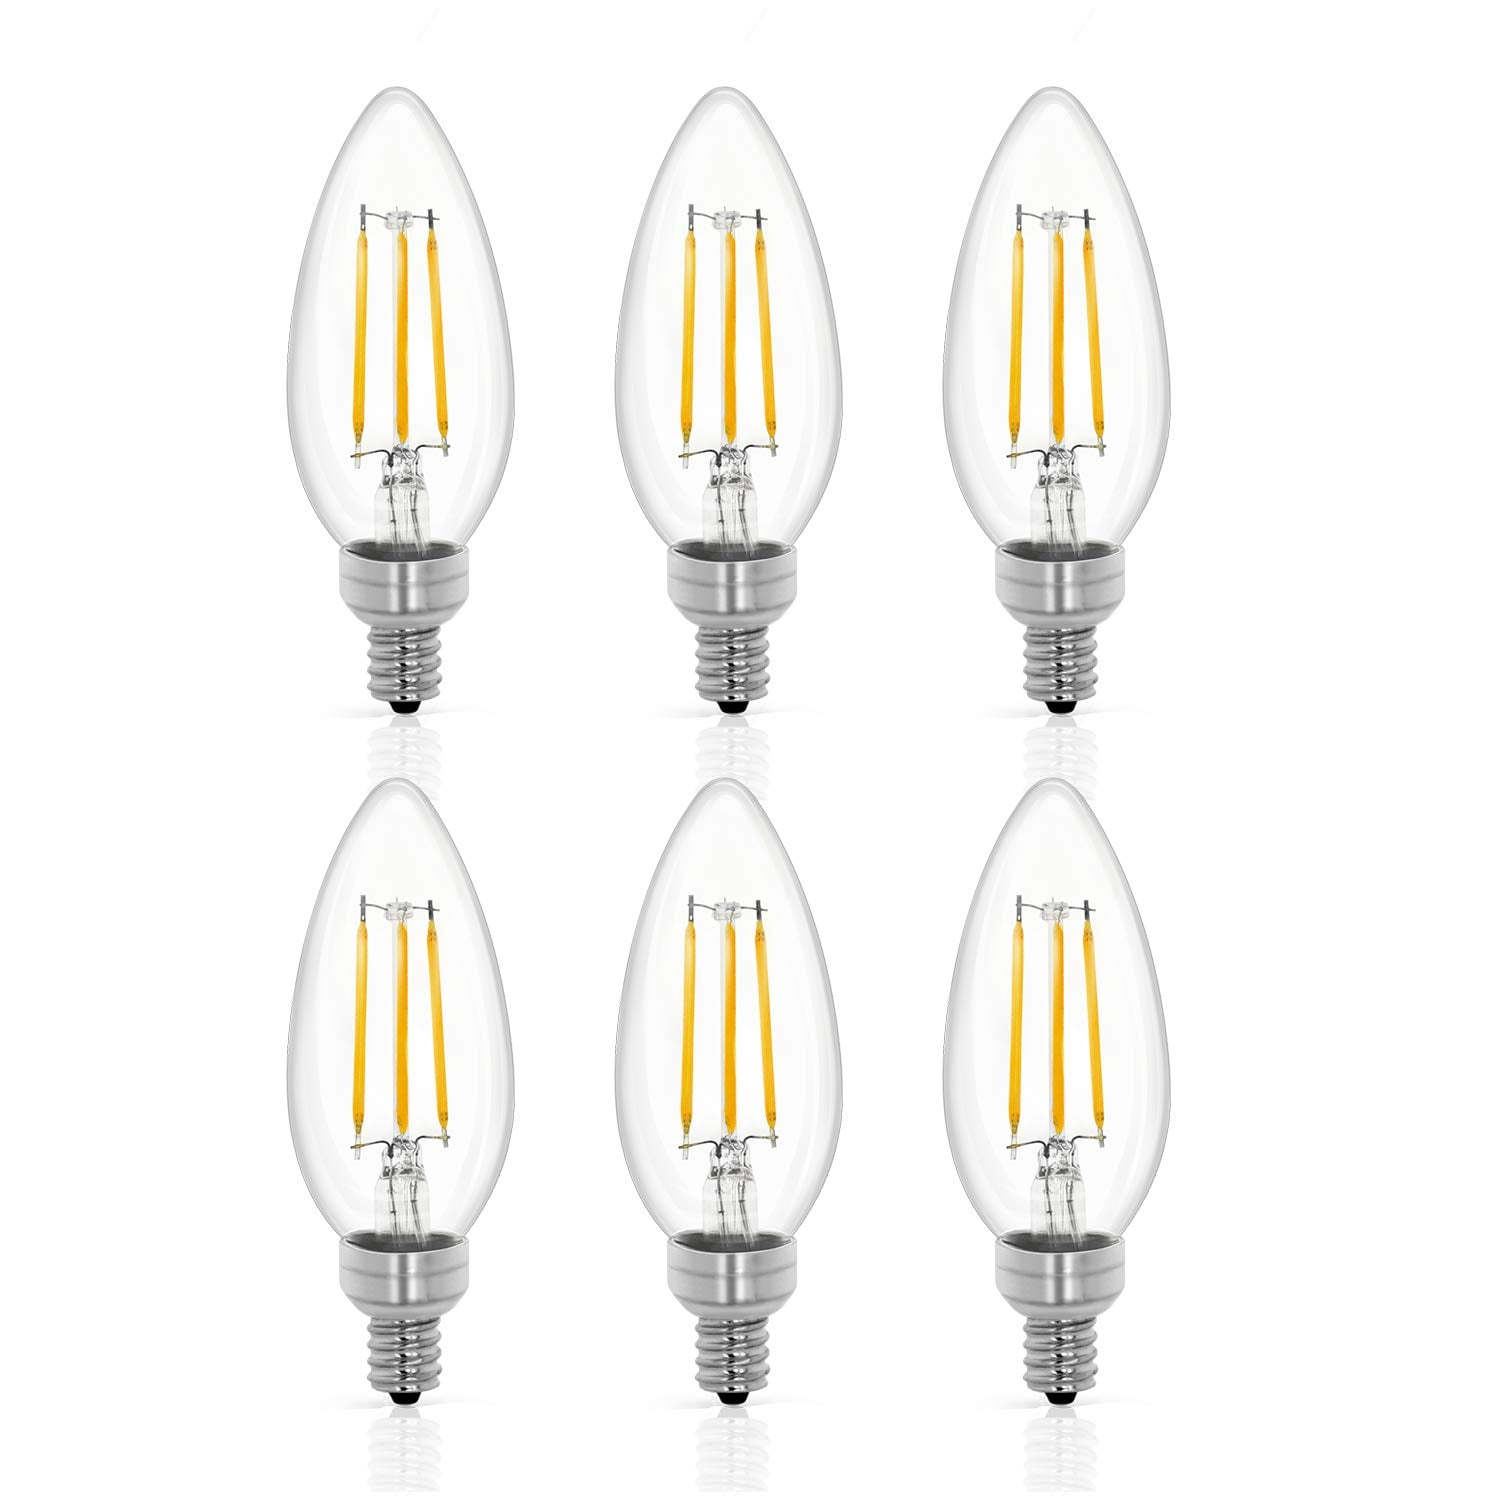 10 x 4W LED SES E14 Candle Bulb Lamp Light Bulb Day Light 6400K Chandelier Lamps 